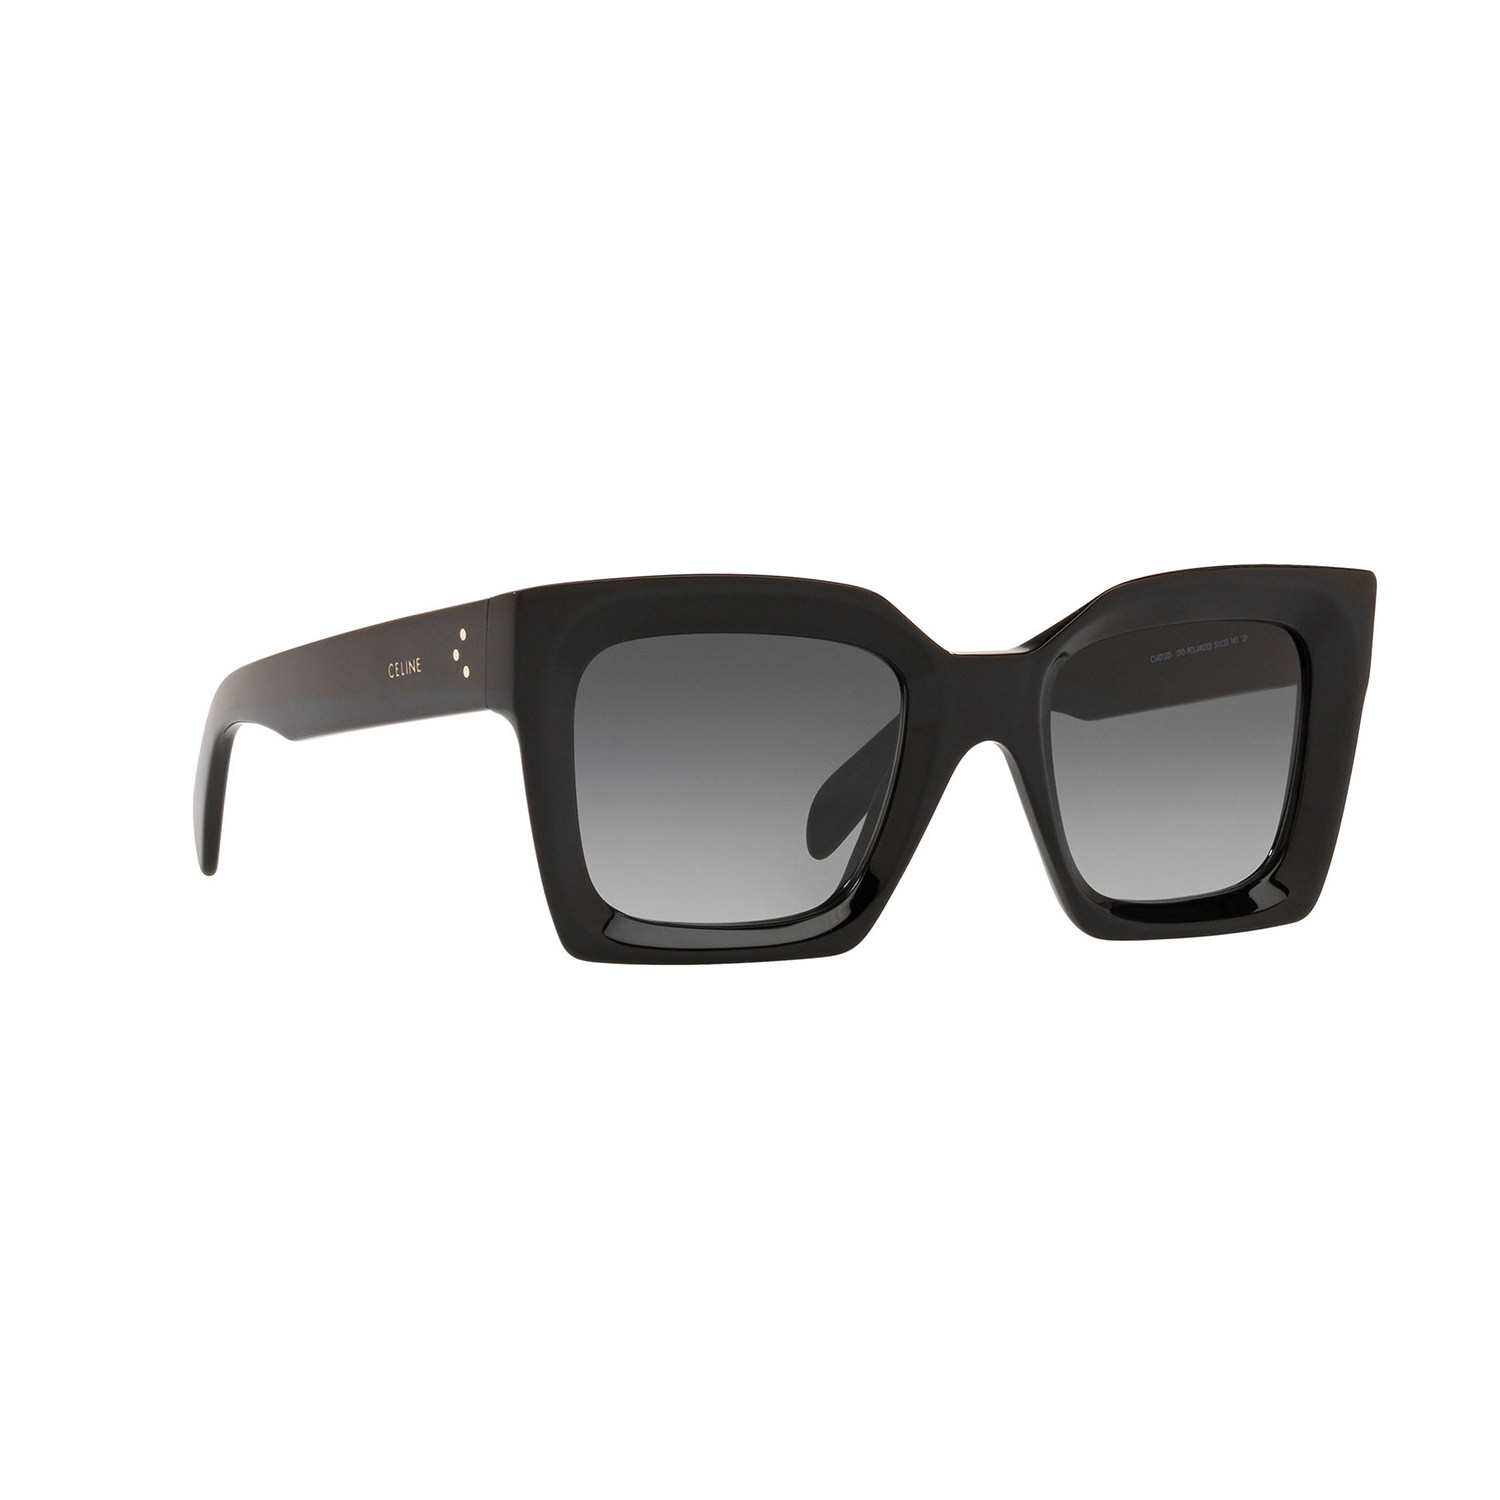 CL40130I Irregular Sunglasses